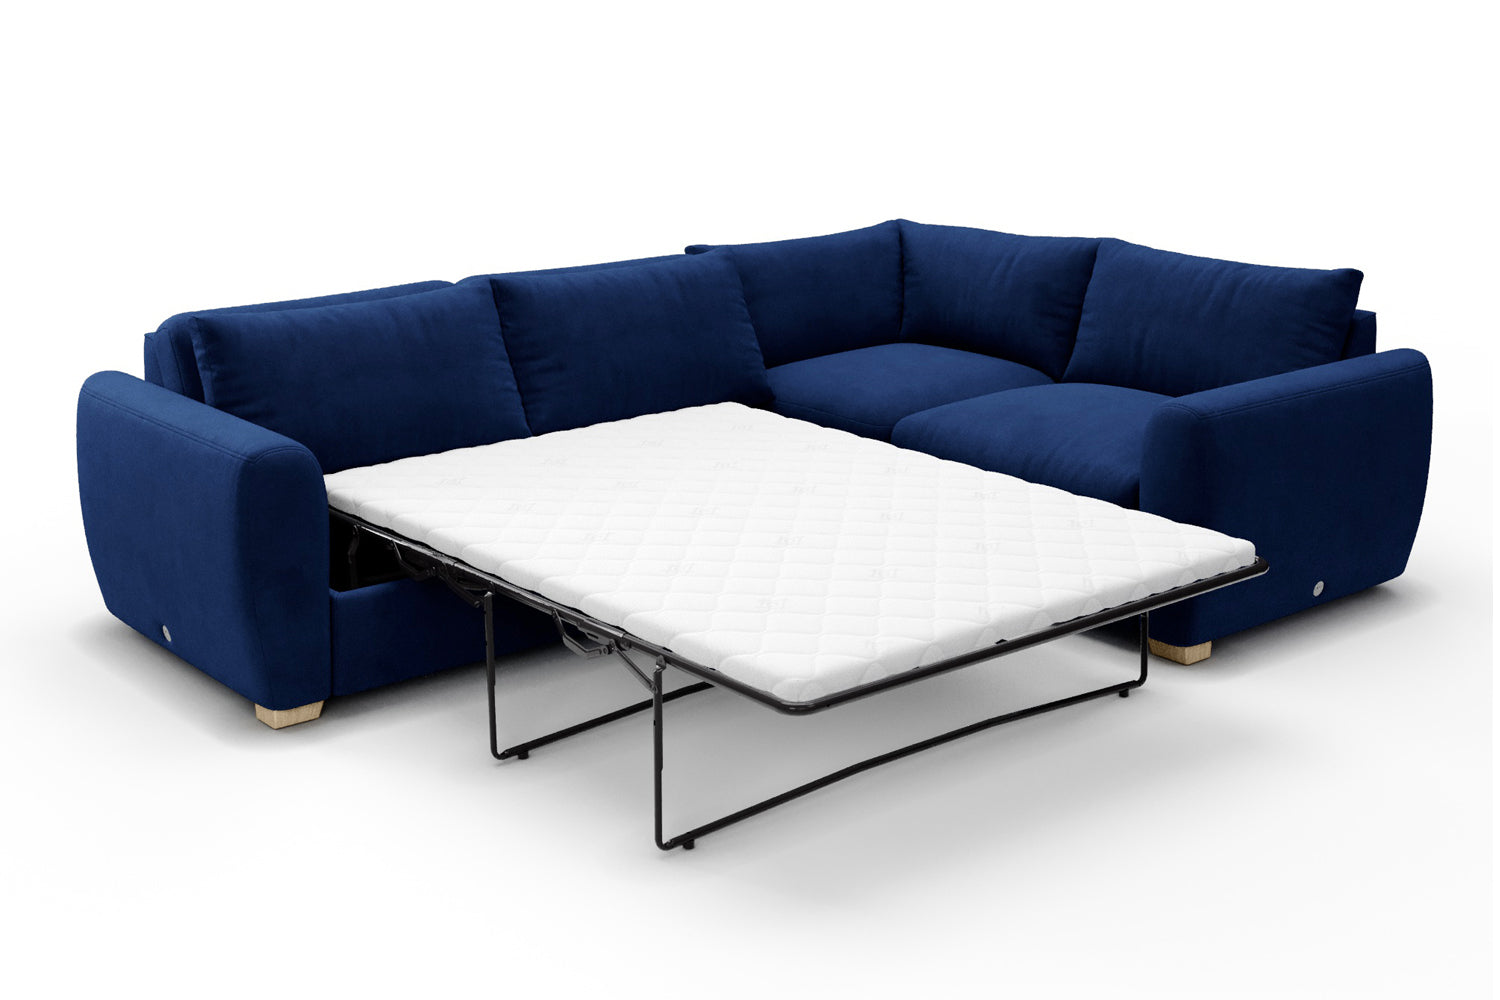 SNUG | The Cloud Sundae Corner Sofa Bed in Midnight Blue